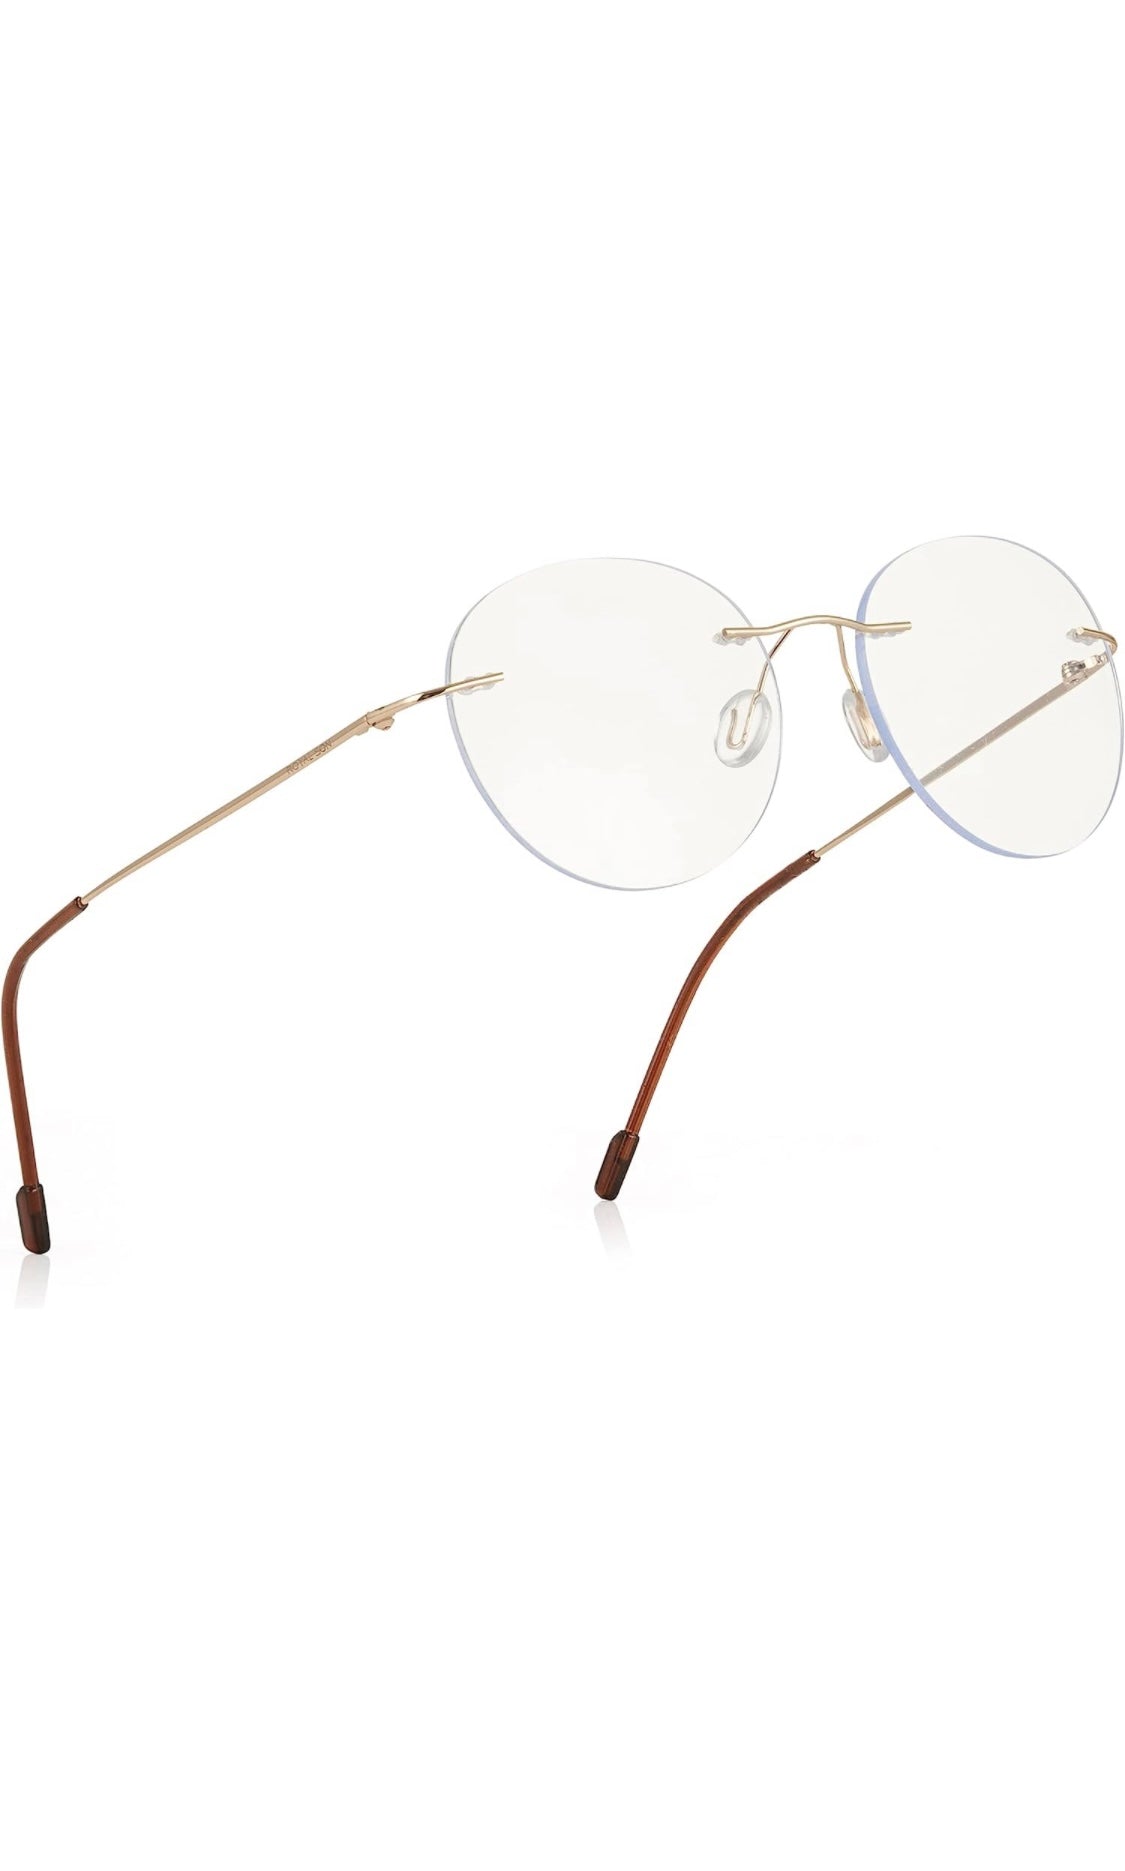 Jodykoes® Rimless Round Frame Zero Power Anti Glare Spectacle For Men and Women | Unisex Computer Eyeglasses Light Weight Round Frameless Eyewear (Gold) - Jodykoes ®